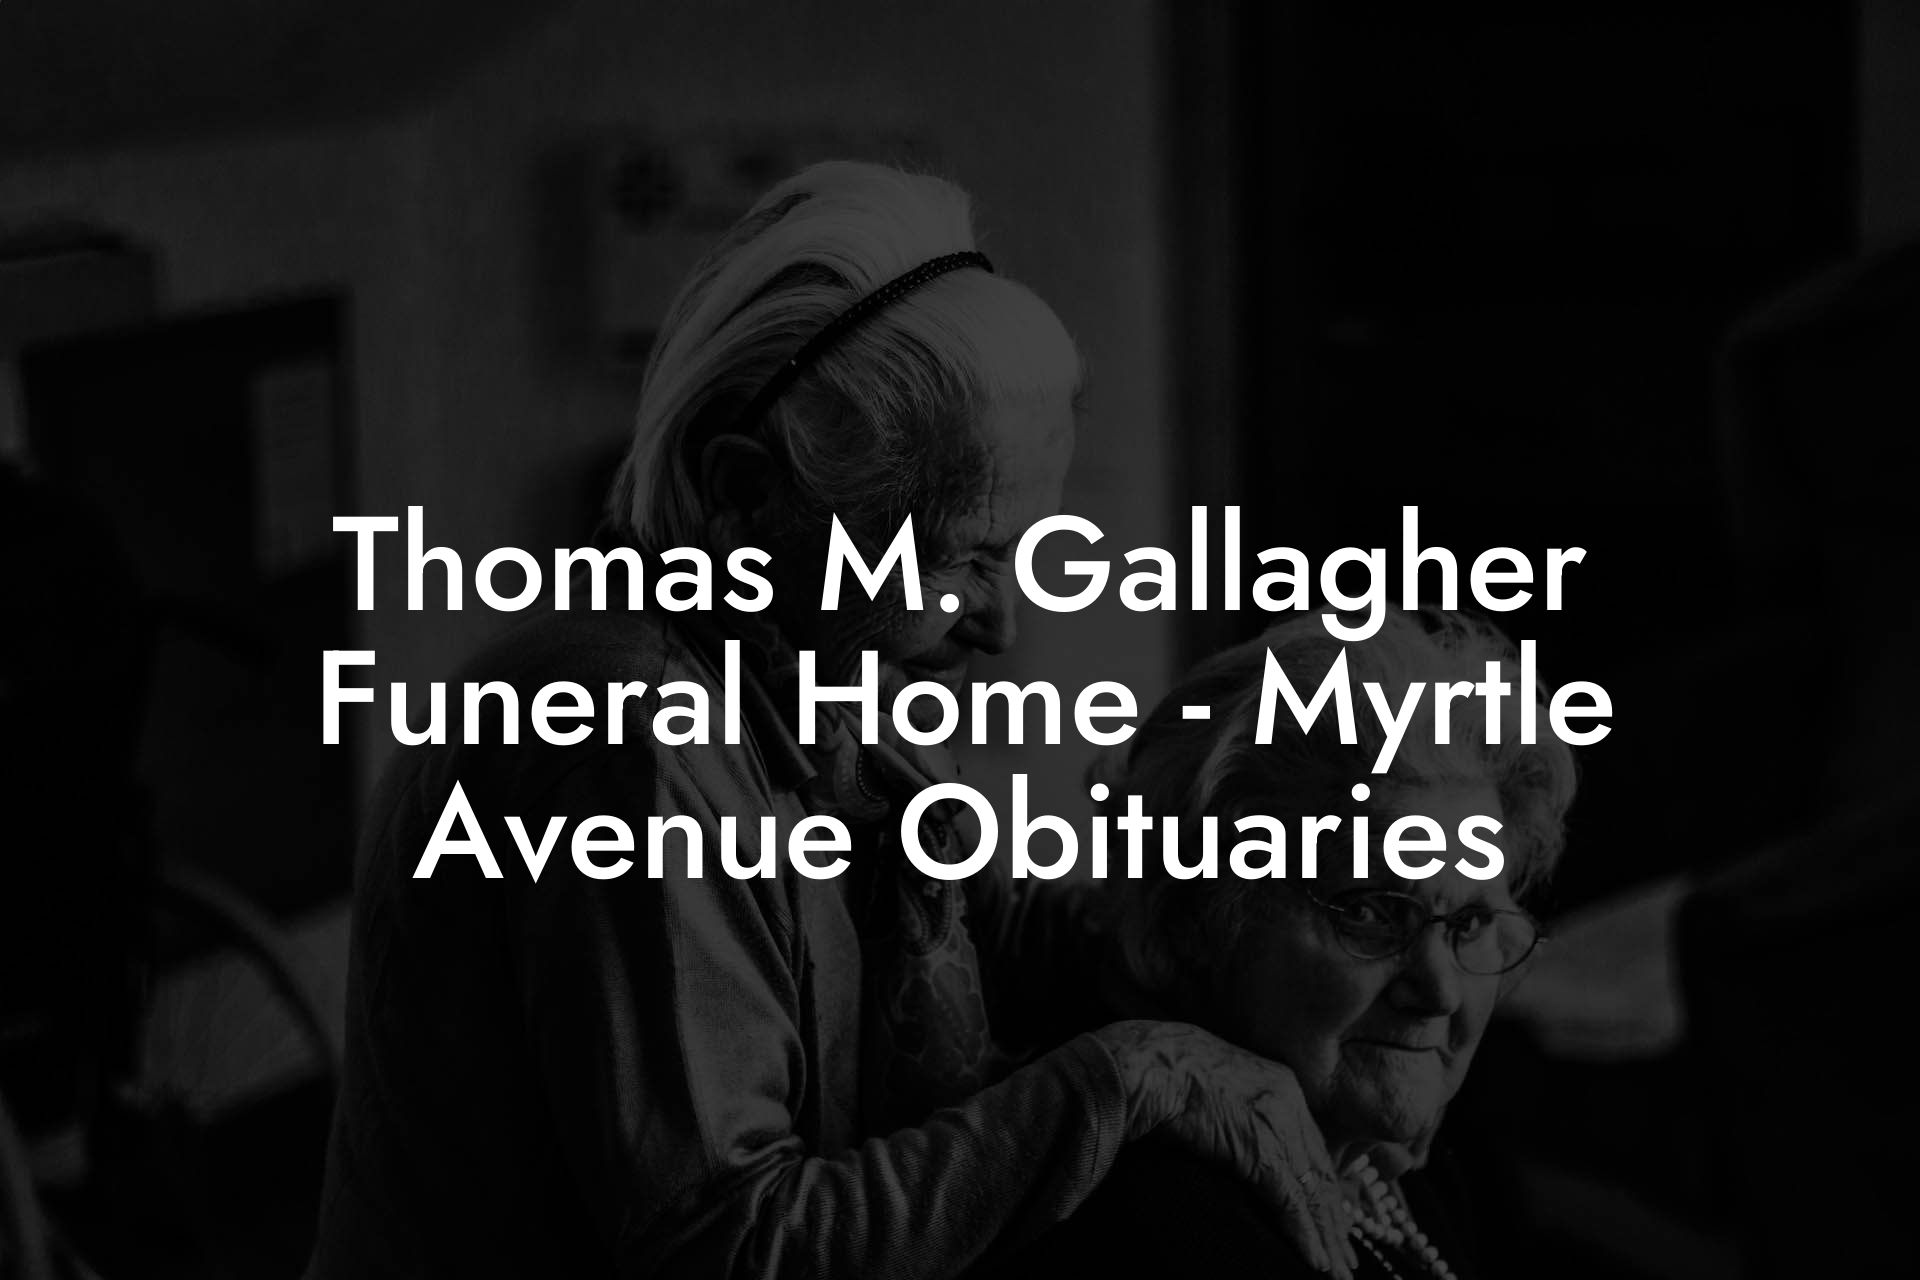 Thomas M. Gallagher Funeral Home - Myrtle Avenue Obituaries